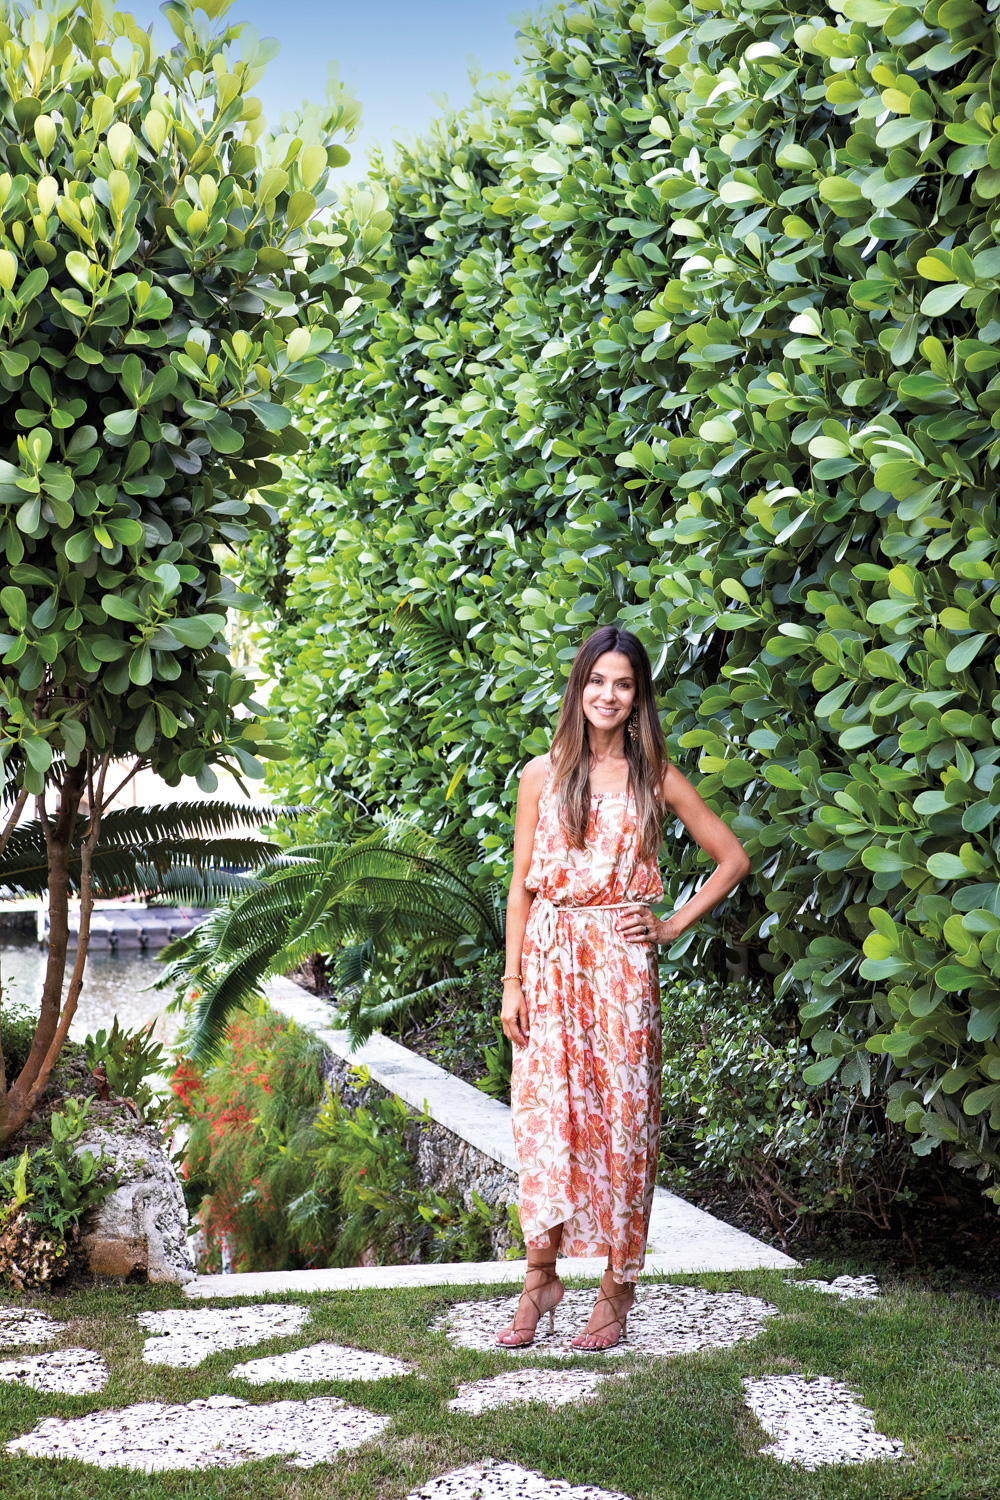 Carolina Freyre stands beside a towering shrub